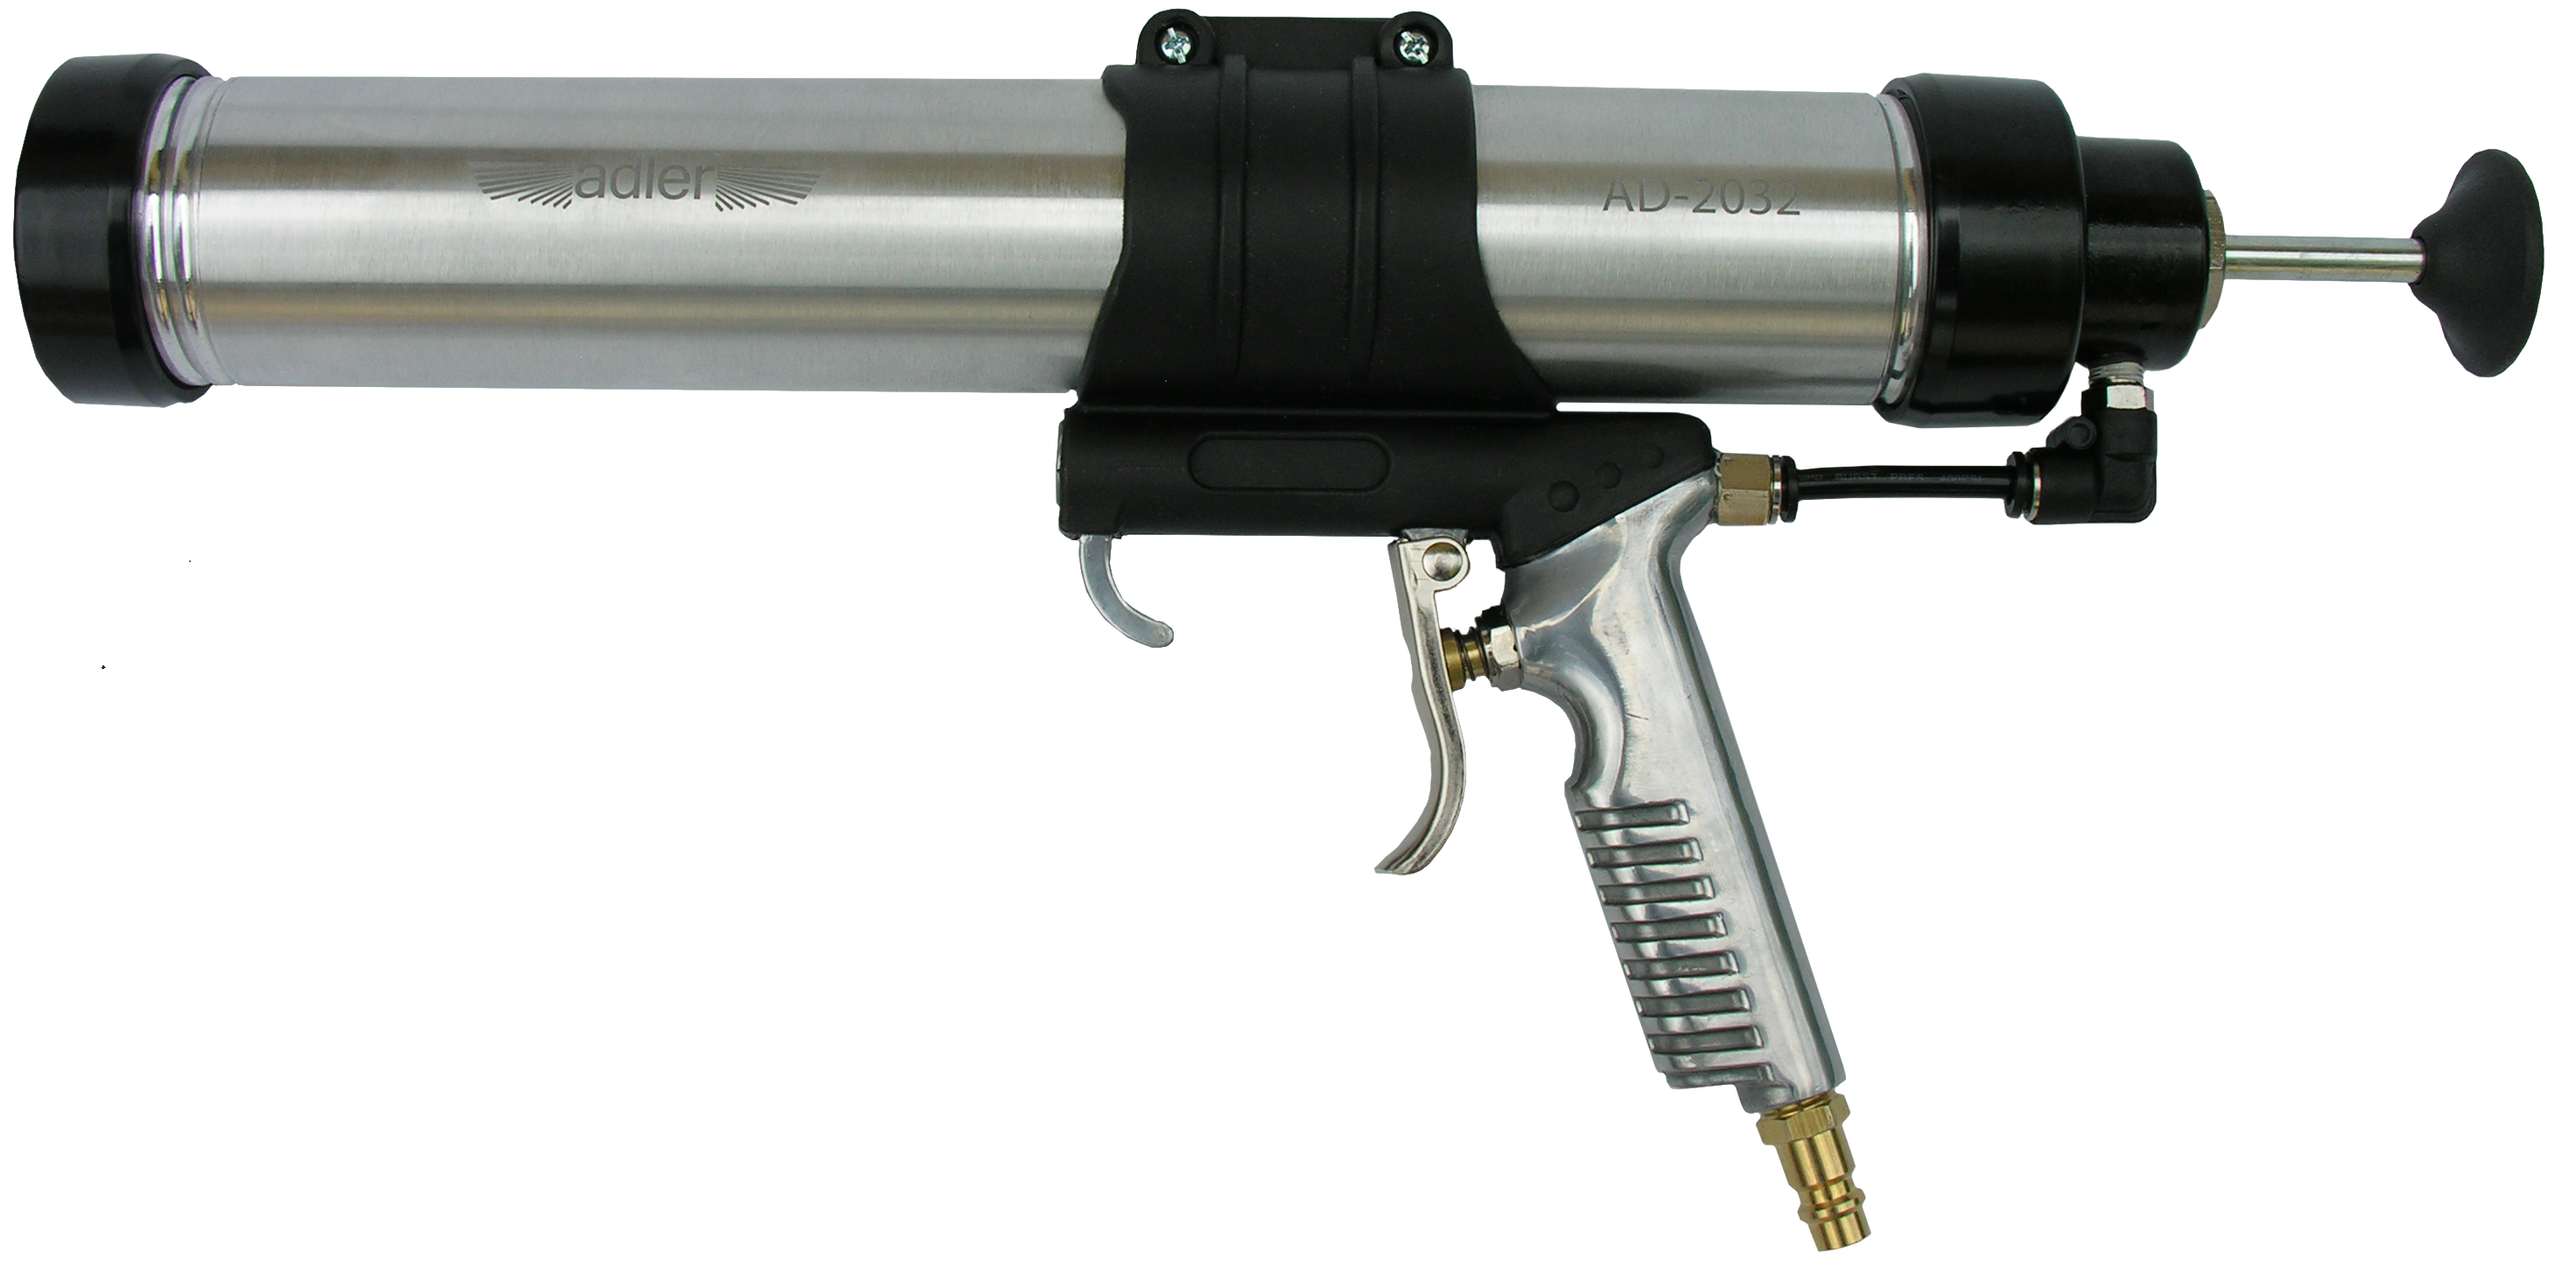 Pistol pneumatic pentru aplicat silicon ADLER AD-2032 INDUSTRIAL